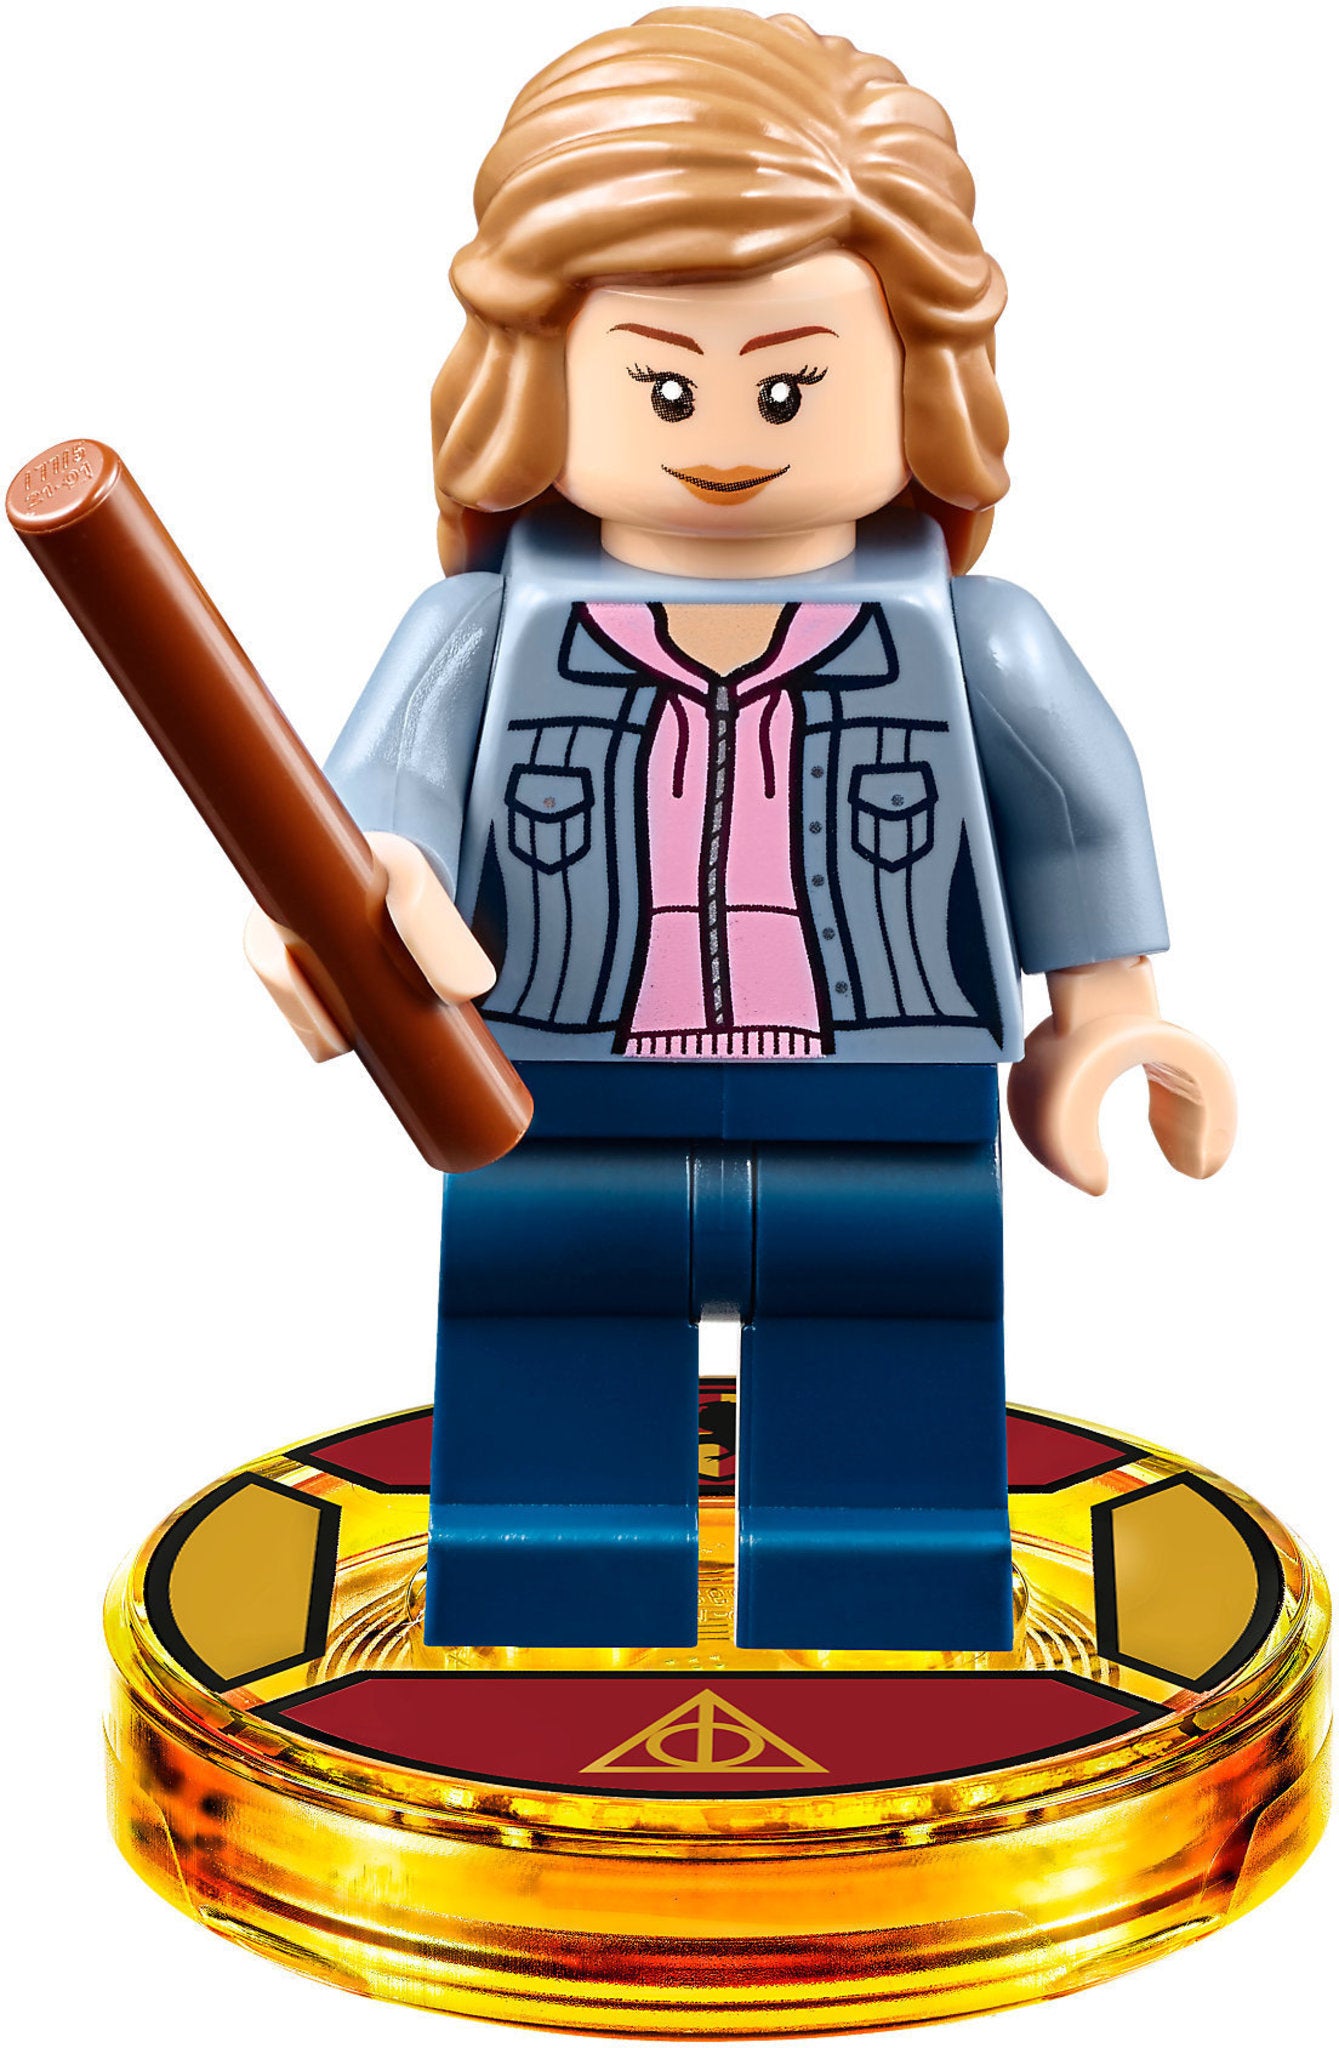 71348 LEGO Dimension - Harry Potter - Fun Pack: Hermione Granger